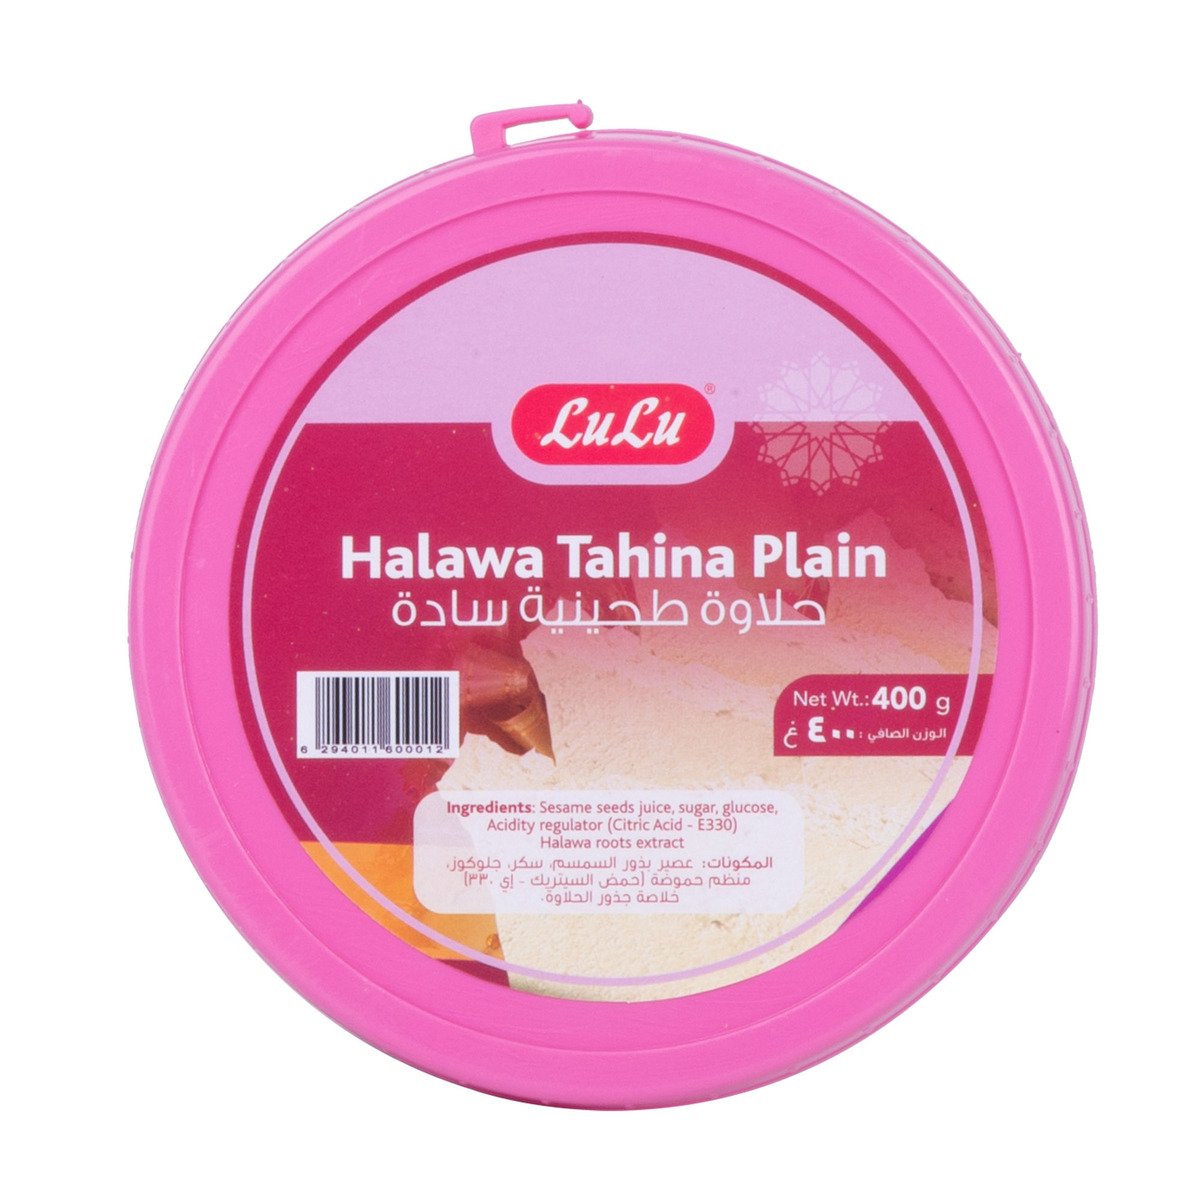 Lulu Halawa Tahina Plain 400 g